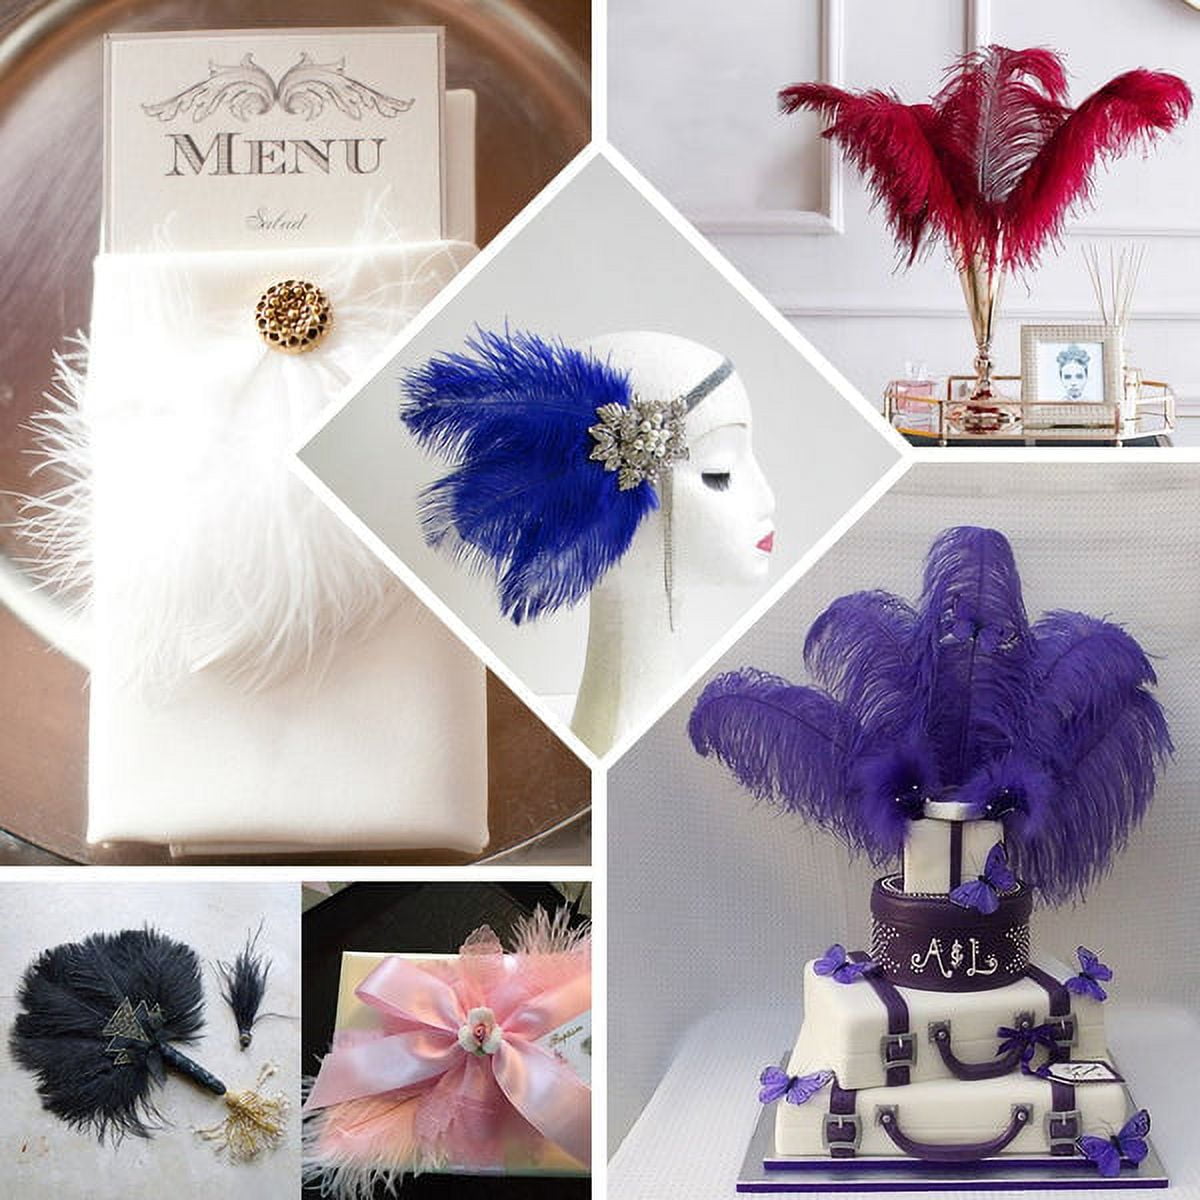 10pc Big Dyed Purple Ostrich Feathers Plume Home Centerpiece Wedding Decor  Craft